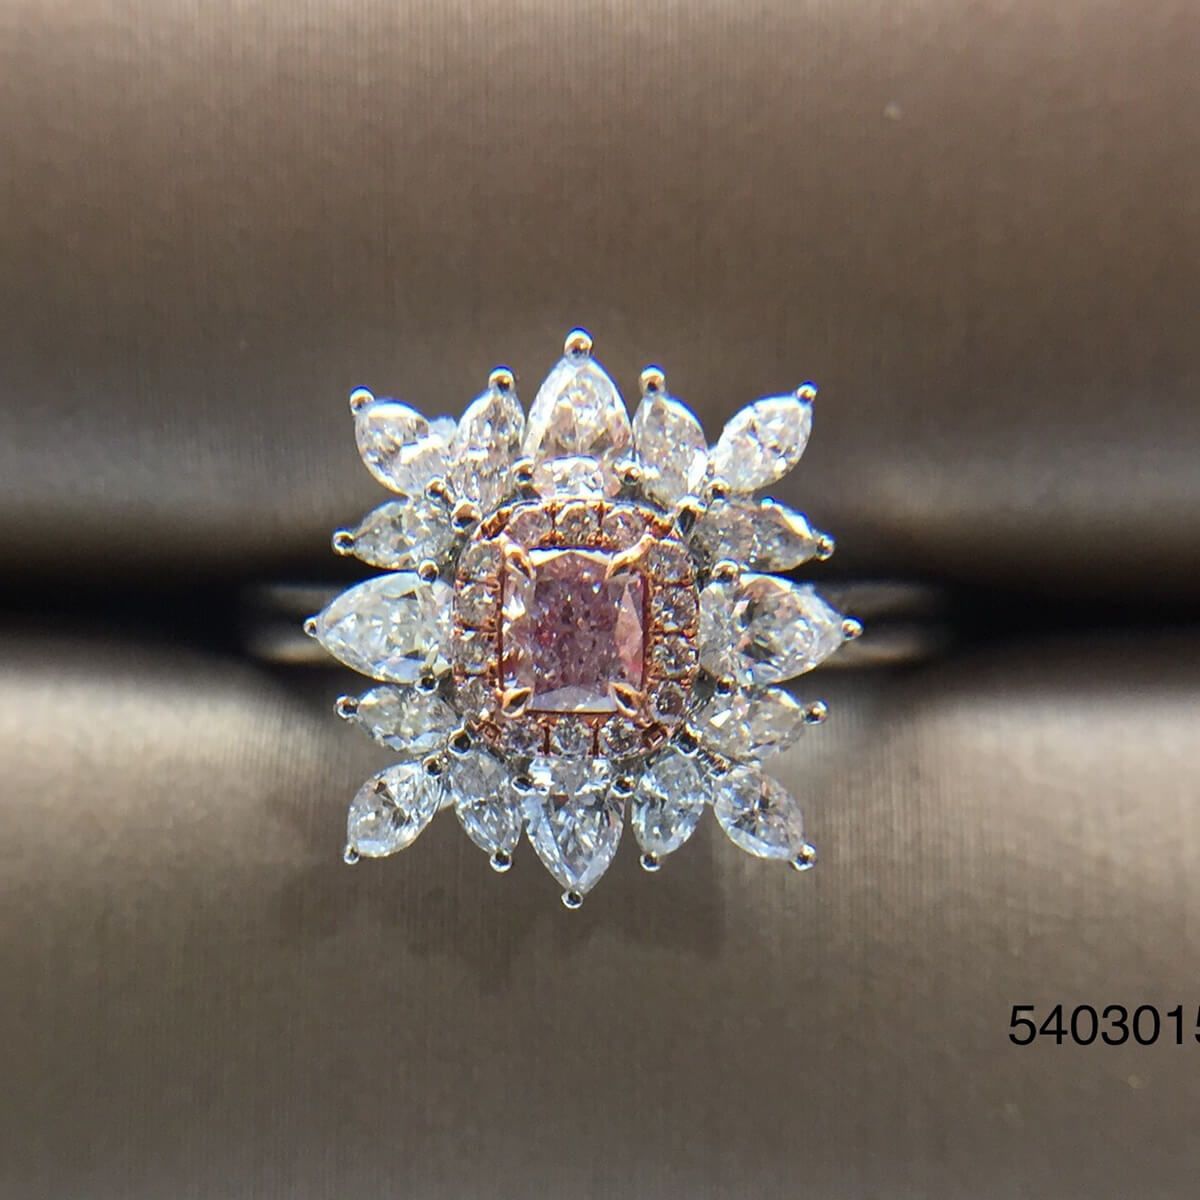 Fancy Intense Pink Diamond Ring, 0.24 Ct. (1.14 Ct. TW), Radiant shape, GIA Certified, 2183340828